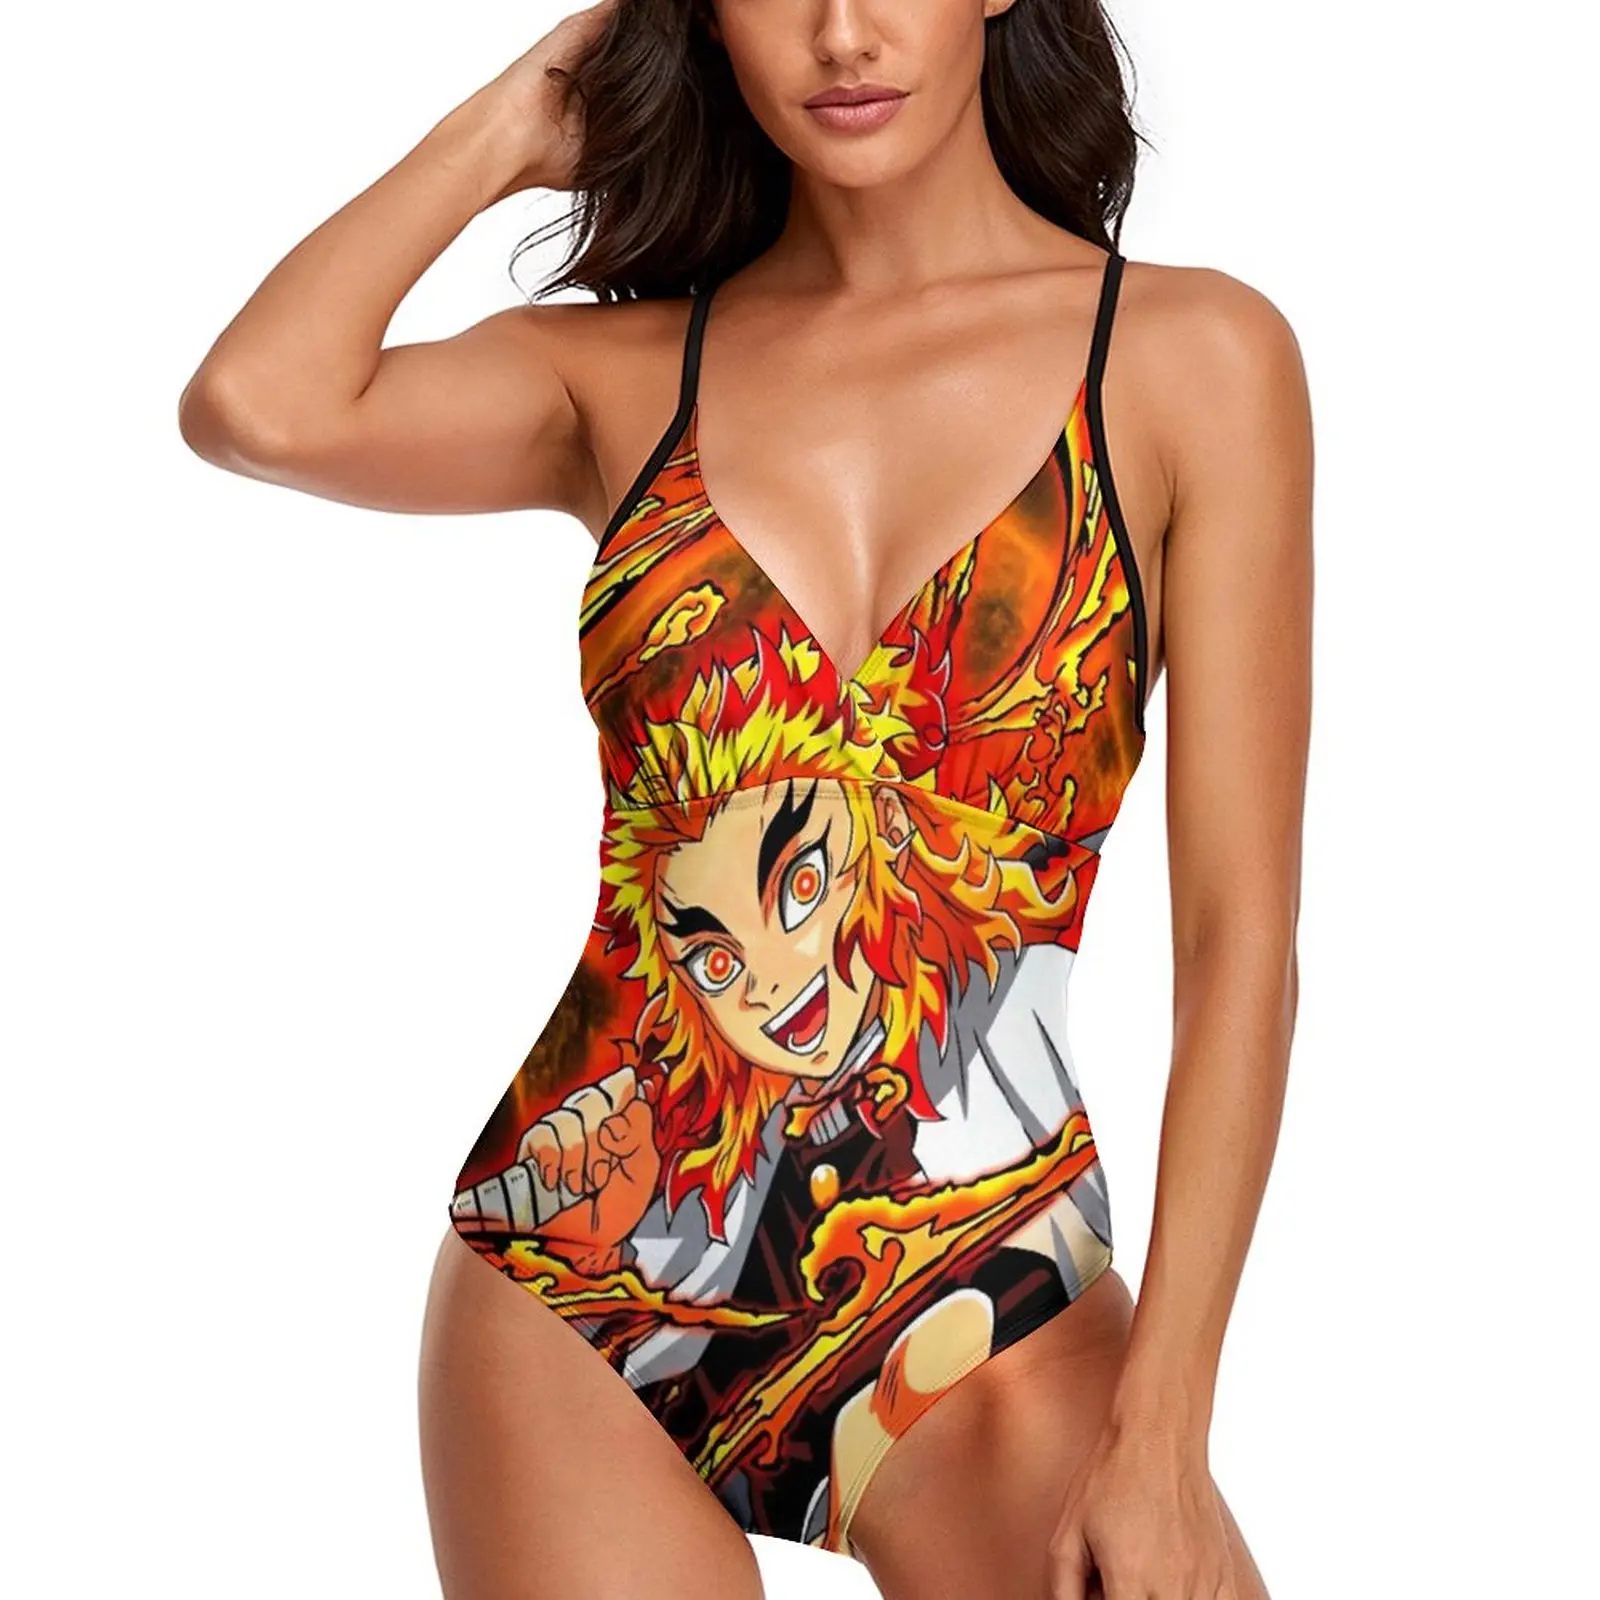 

Demon Slayer Swimsuit The Flame Hashira One Piece Swimwear Female Push Up Swimsuits Stylish Bathing Suits High Cut Beachwear